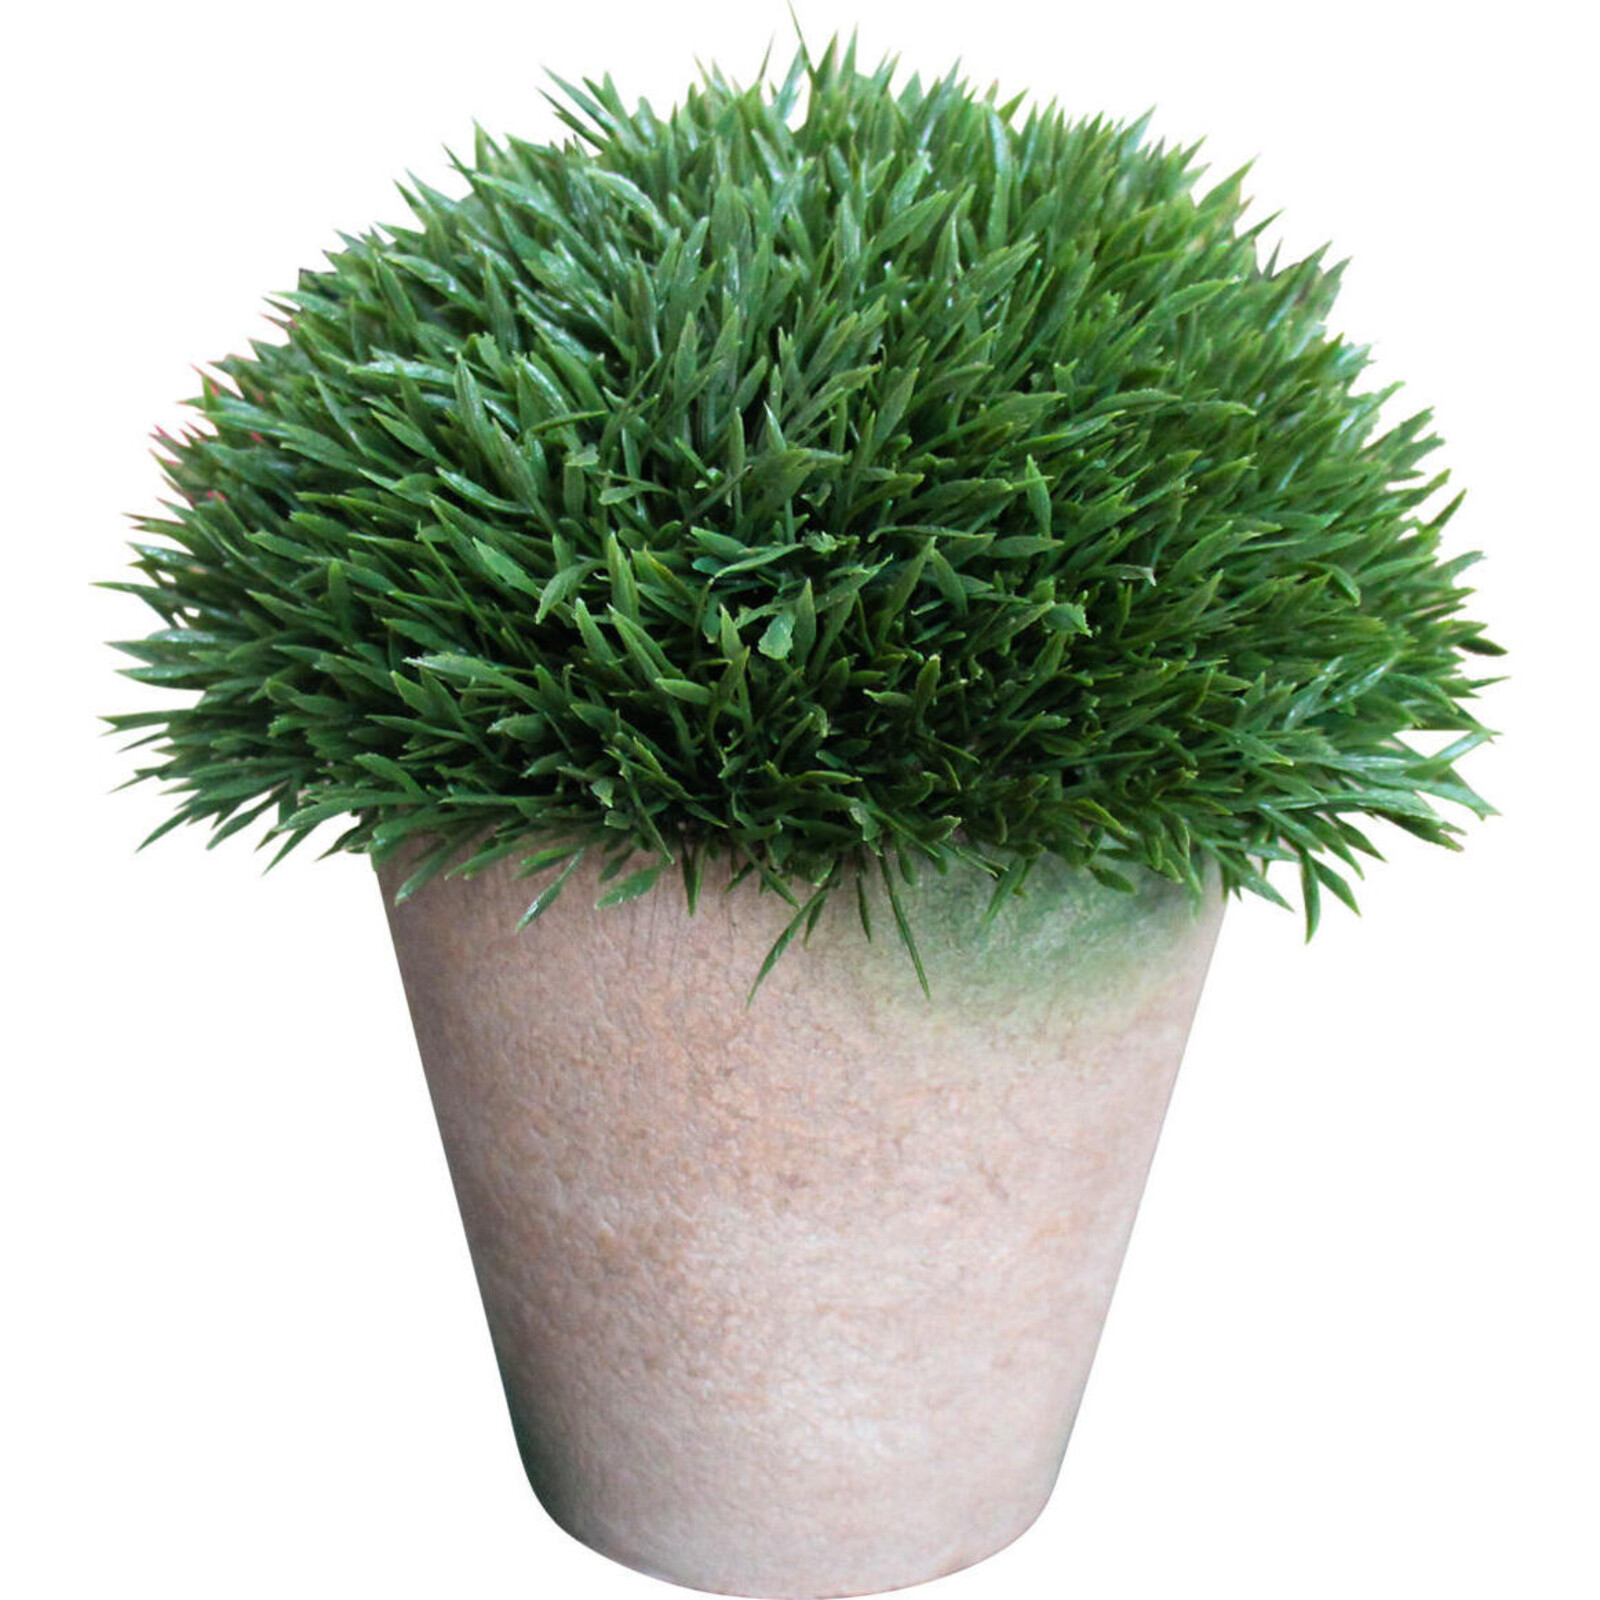 Faux Plant Spikey Grass